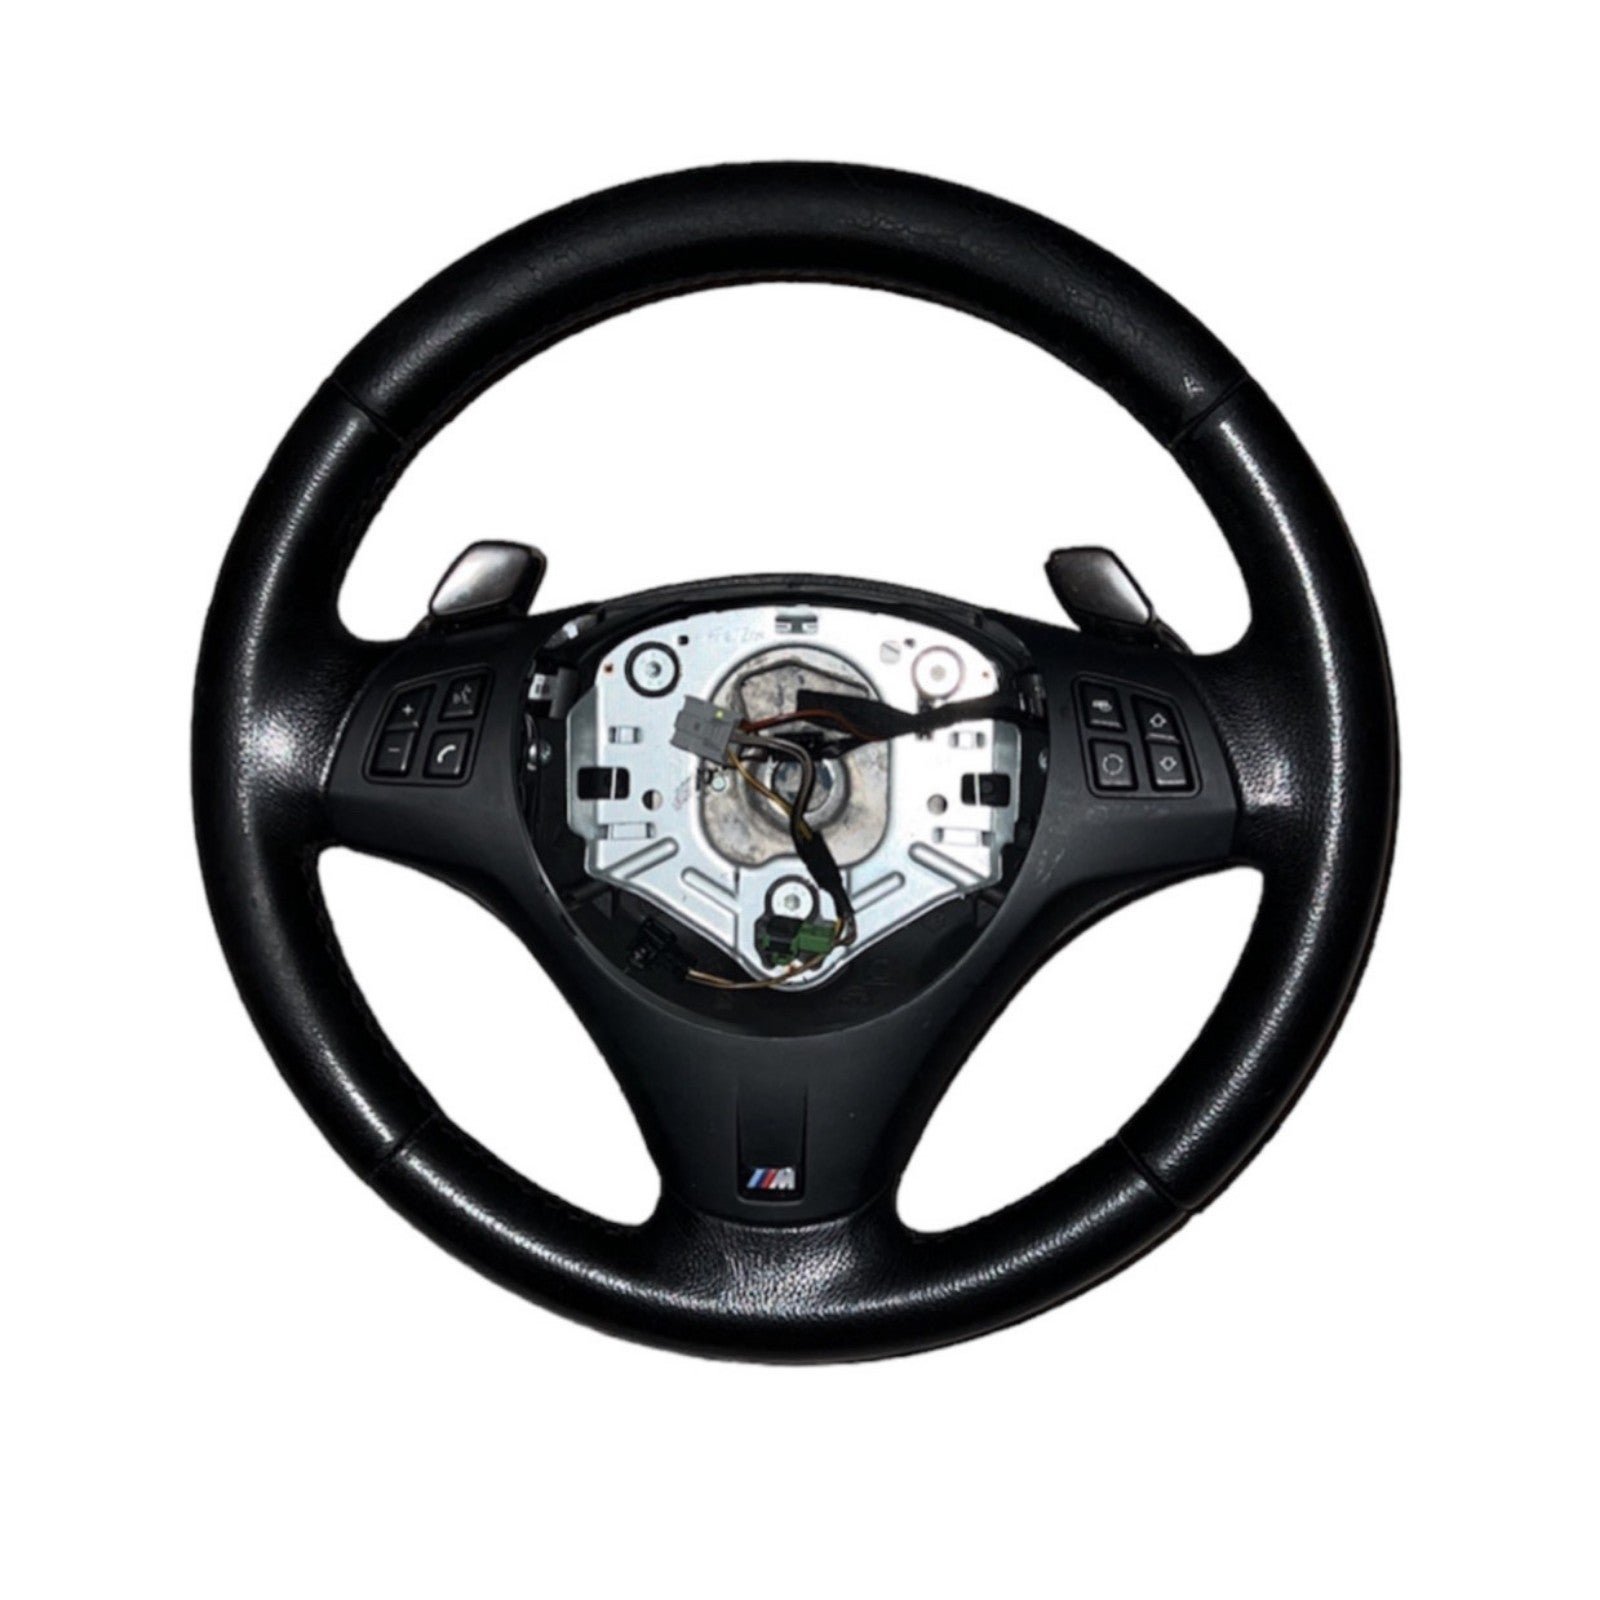 BMW e92/ E90 / E93 steering wheel 2yO1gY48k